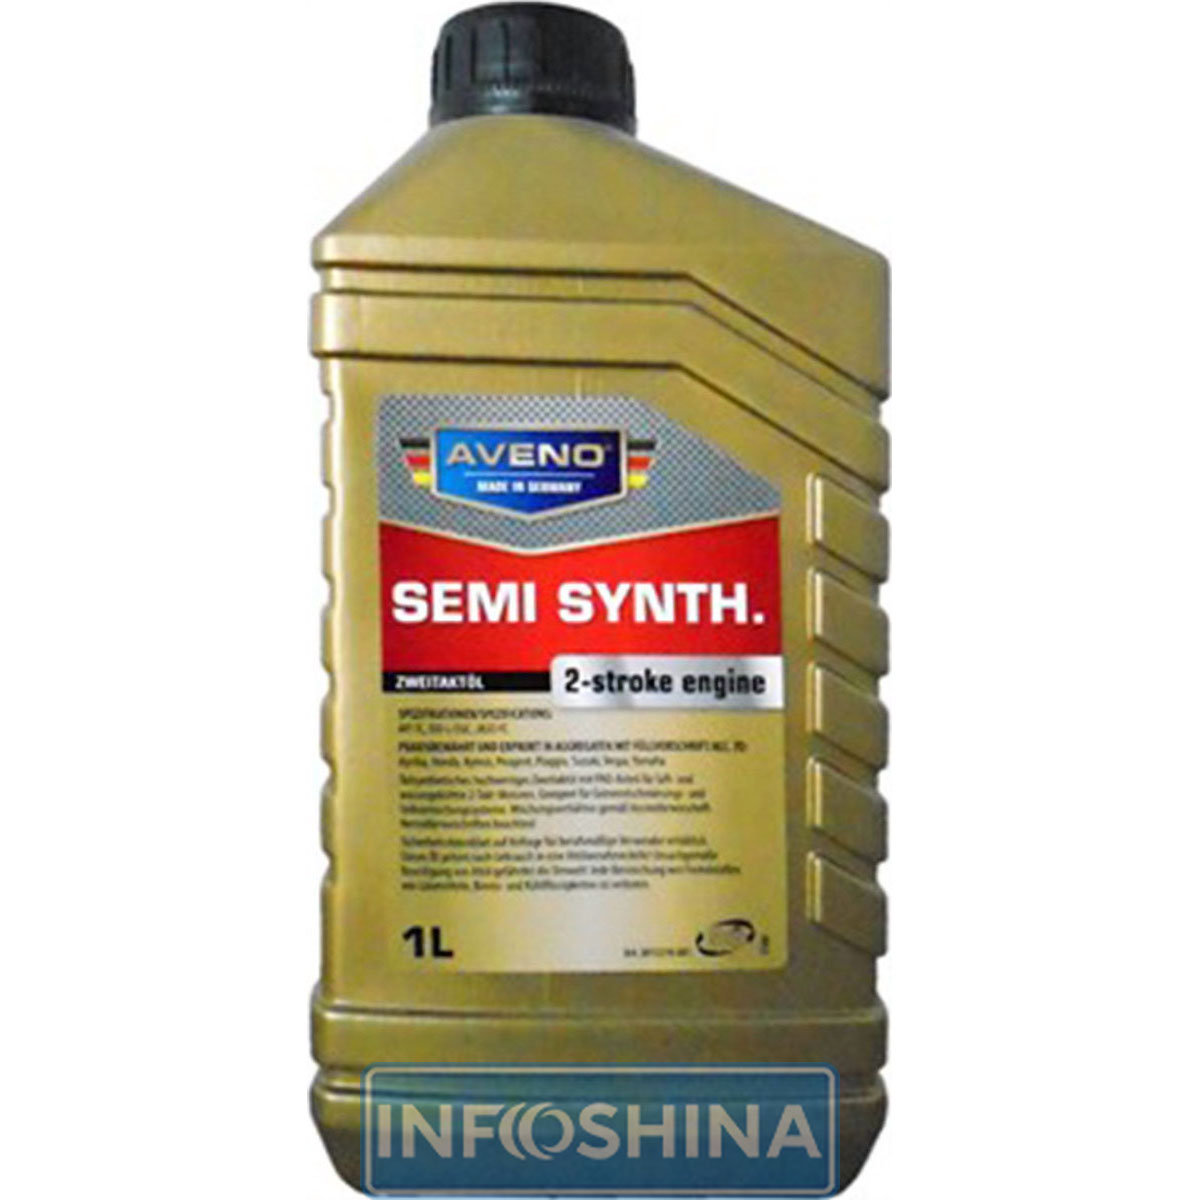 Купить масло AVENO Semi Synth. 2-stroke engine (1л)